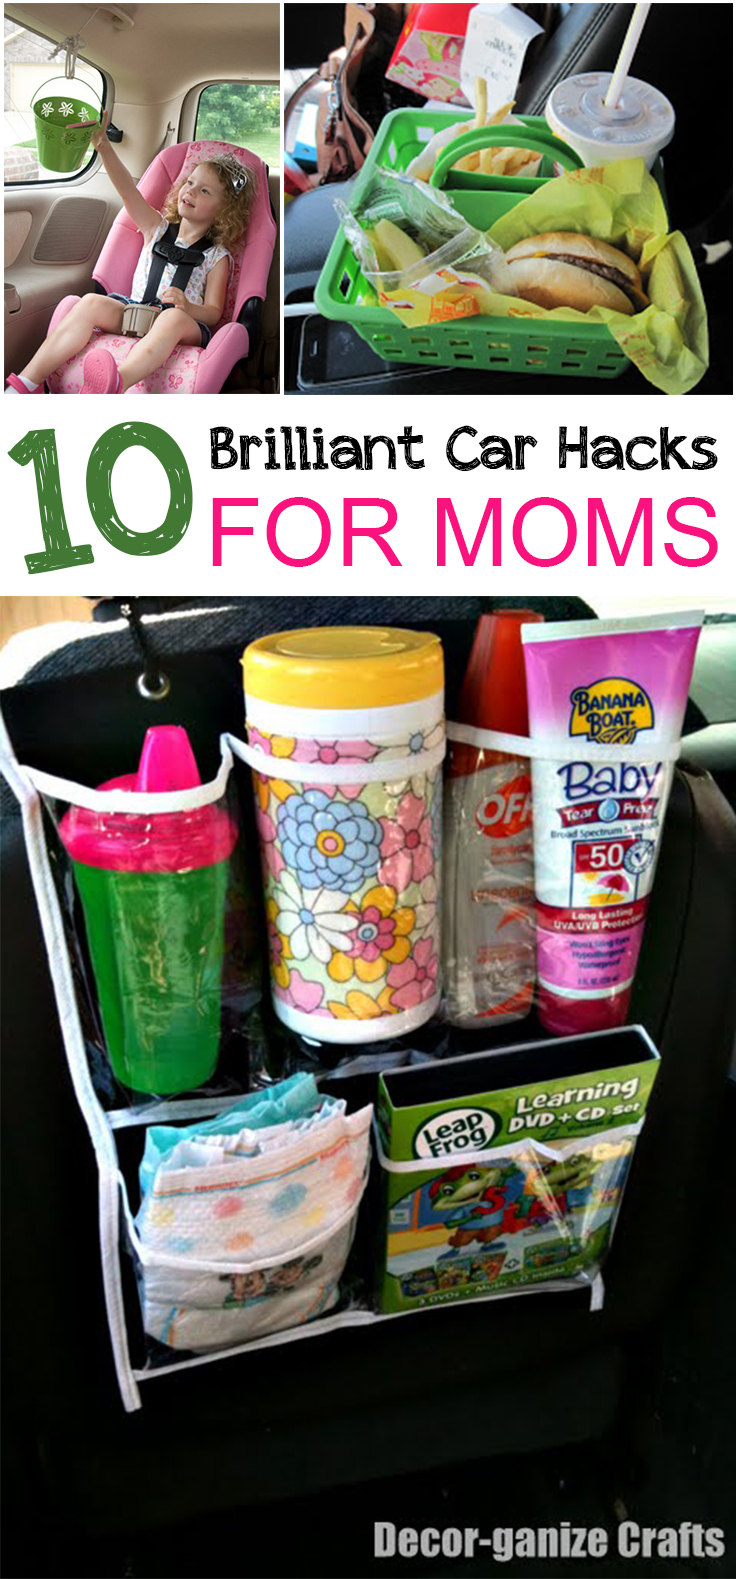 10 Brilliant Car Hacks for Moms